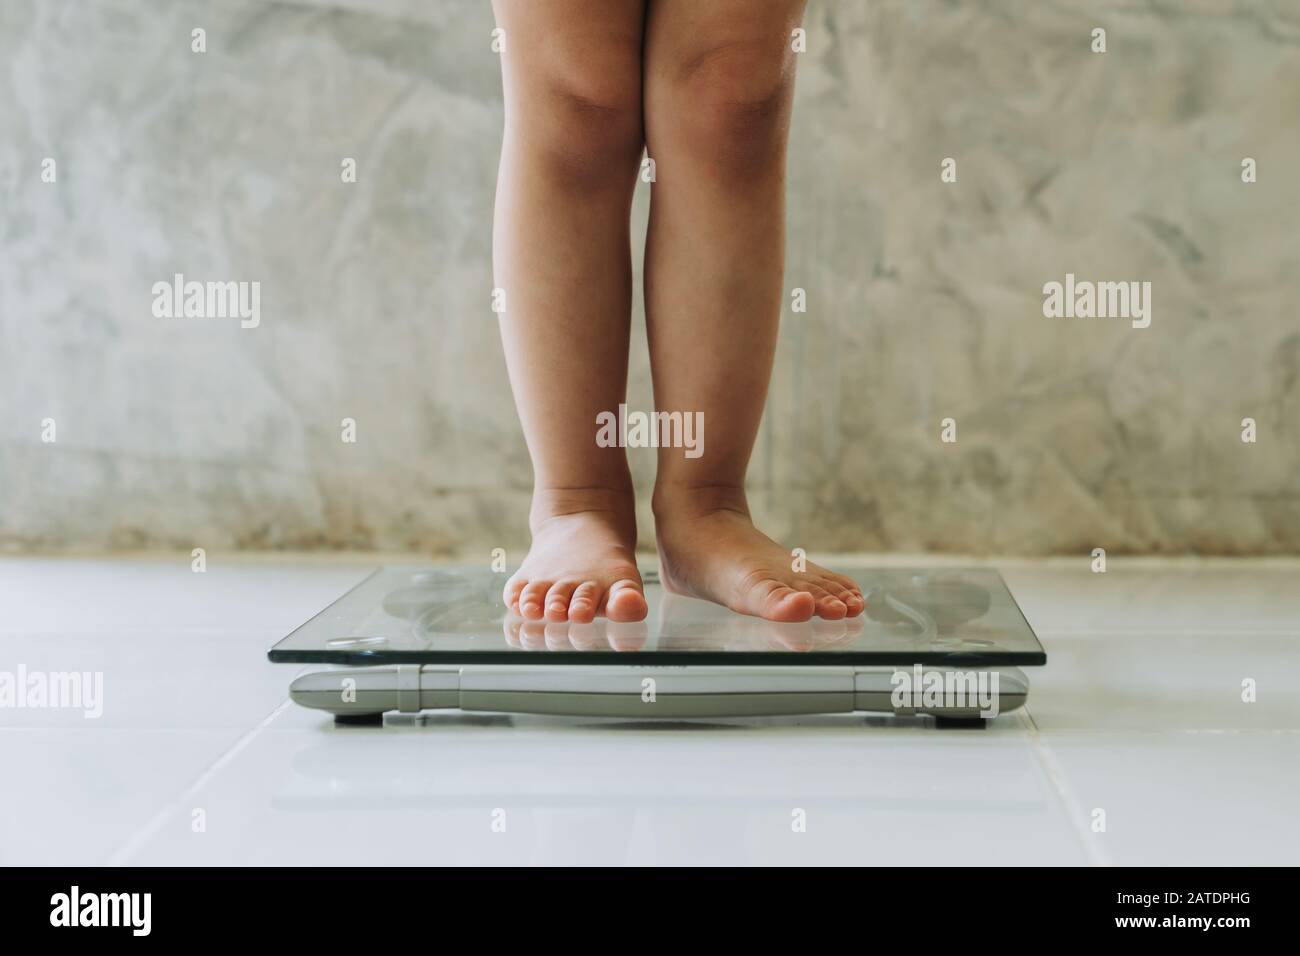 https://c8.alamy.com/comp/2ATDPHG/little-girl-on-weight-scale-on-floor-background-diet-concept-2ATDPHG.jpg